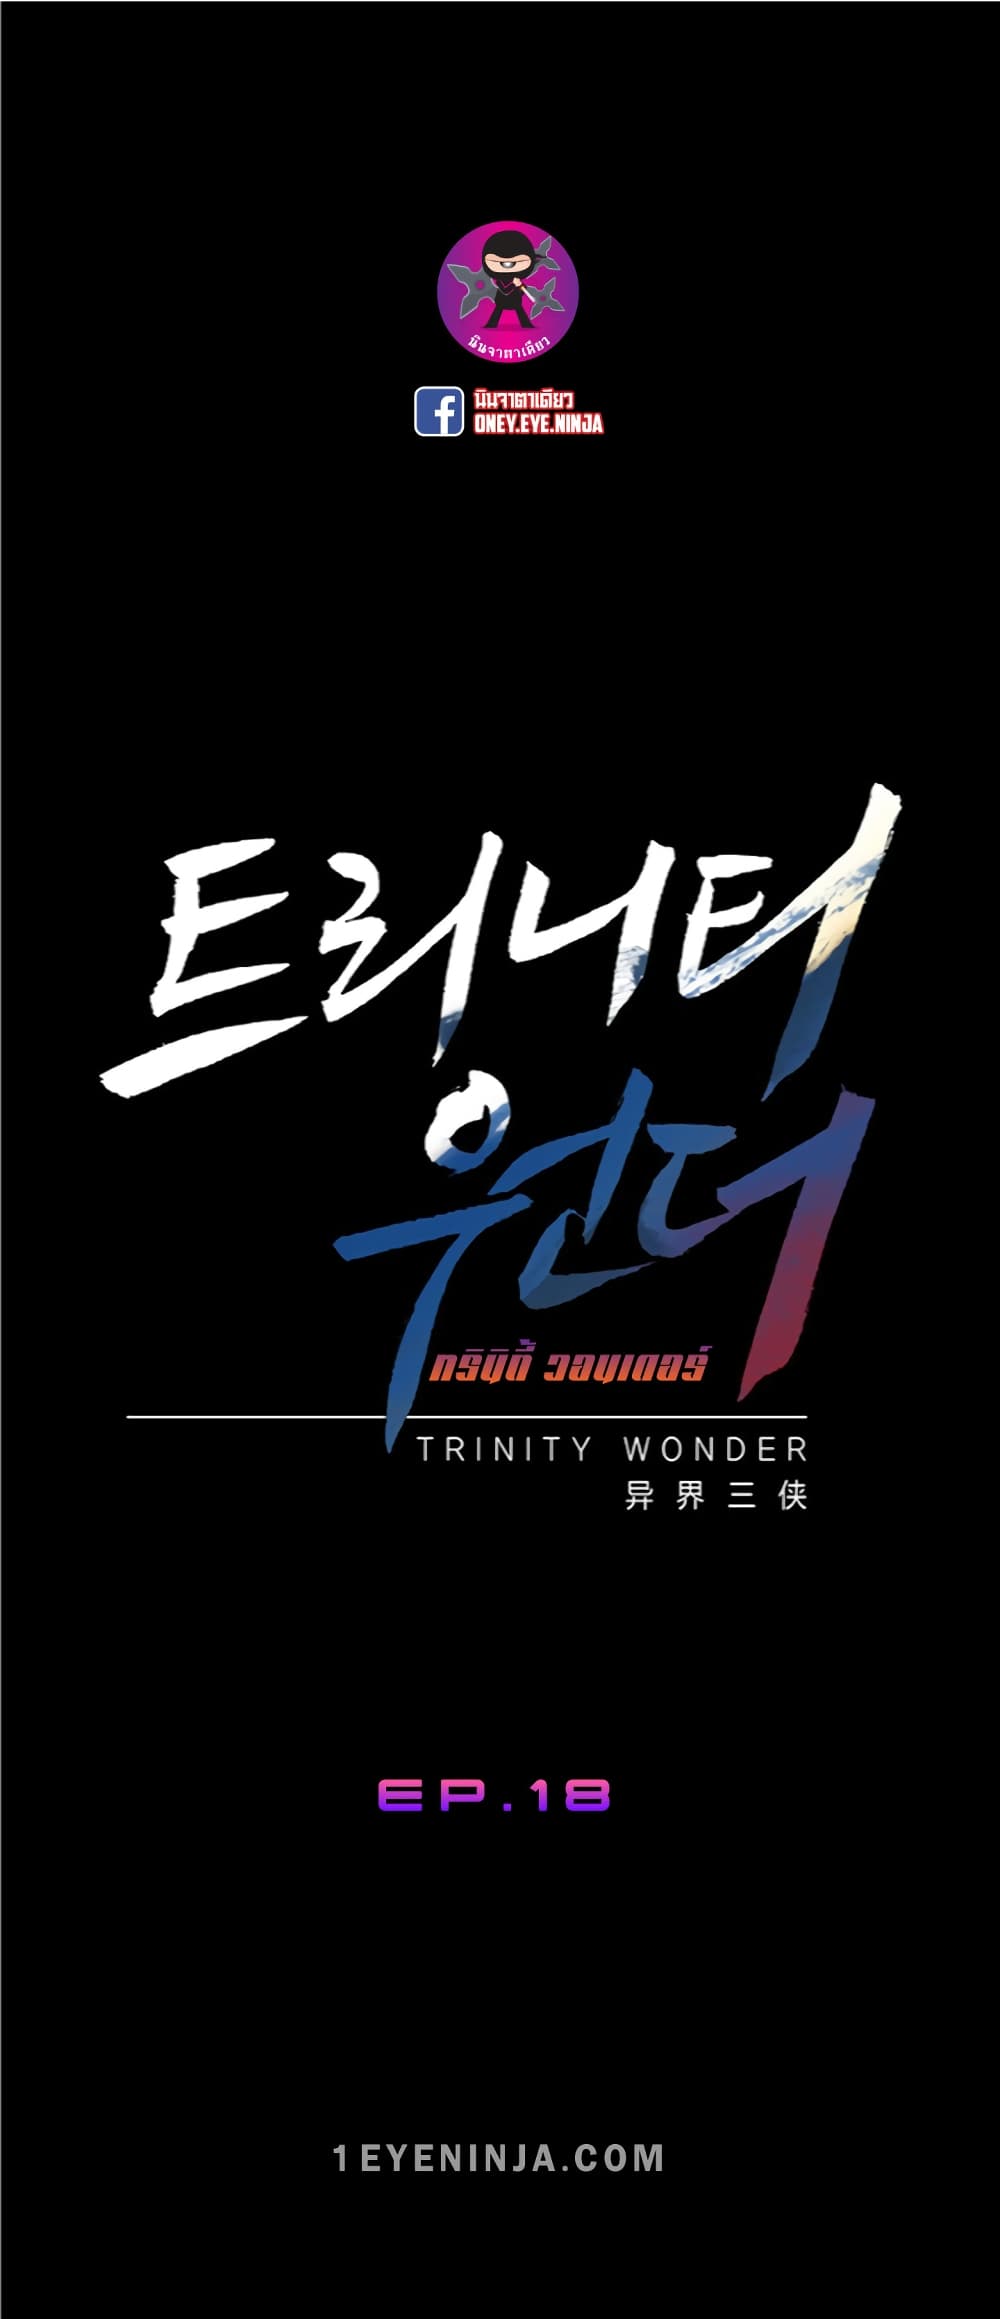 Trinity Wonder 18 (2)